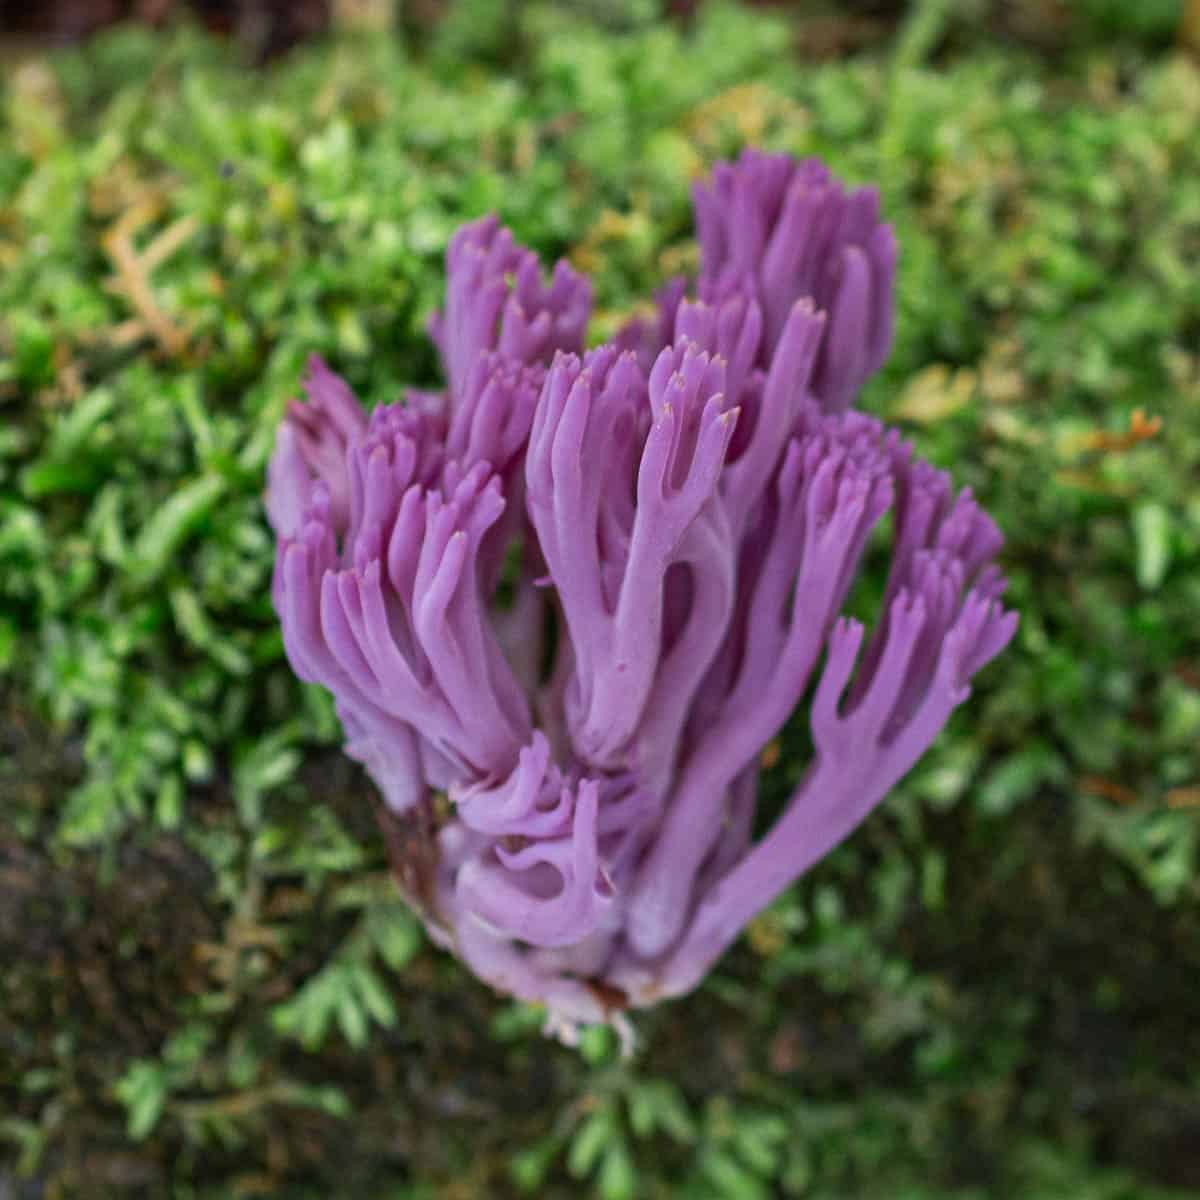 Clavaria zollingeri, the purple coral mushroom growing on a mossy log. 